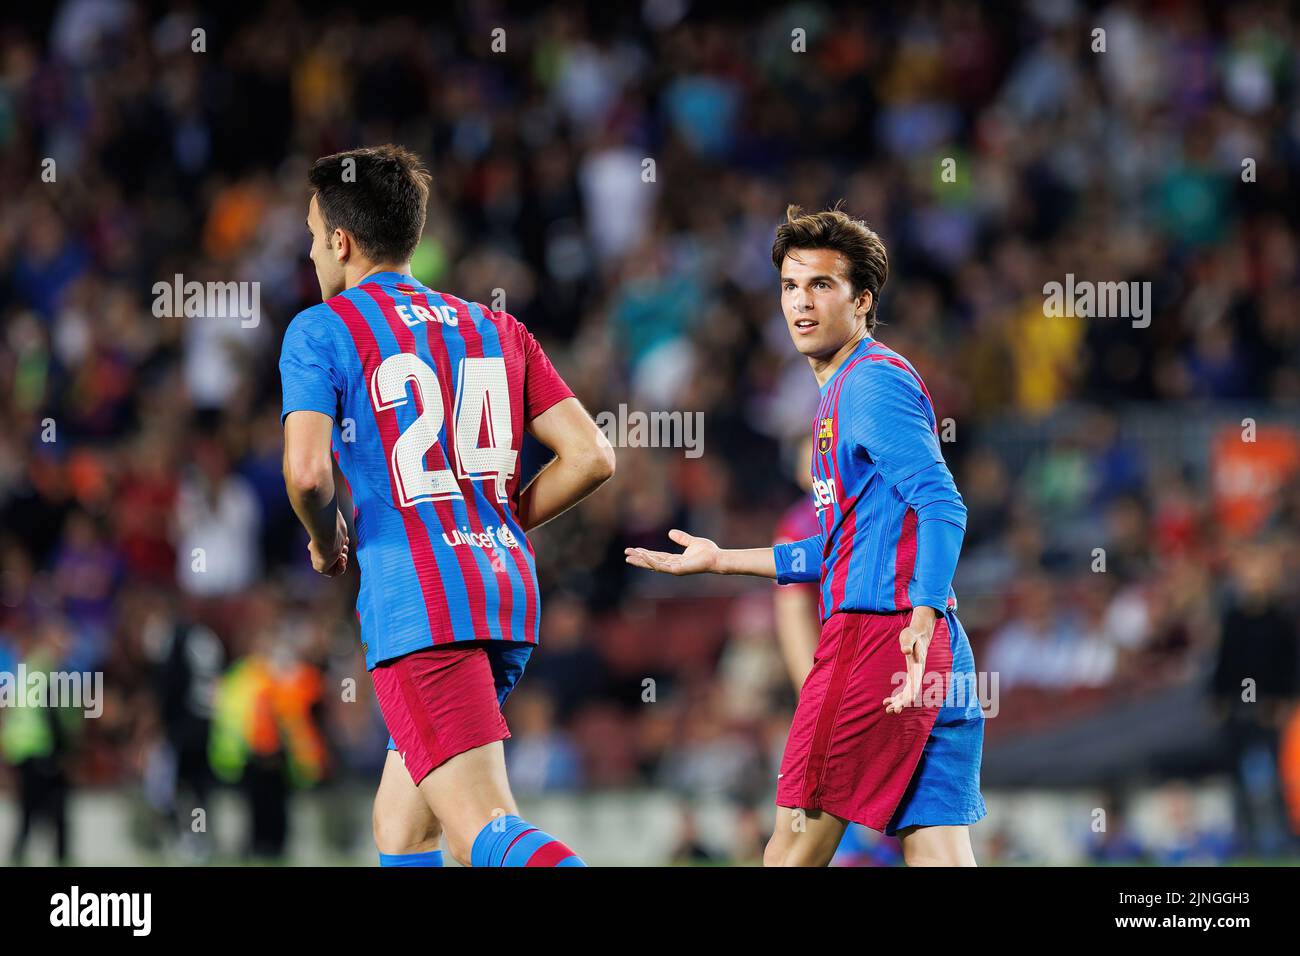 BARCELONA - 10. MAI: Riqui Puig in Aktion während des La Liga-Spiels zwischen dem FC Barcelona und dem Real Club Celta de Vigo am 10. Mai im Camp Nou Stadium Stockfoto